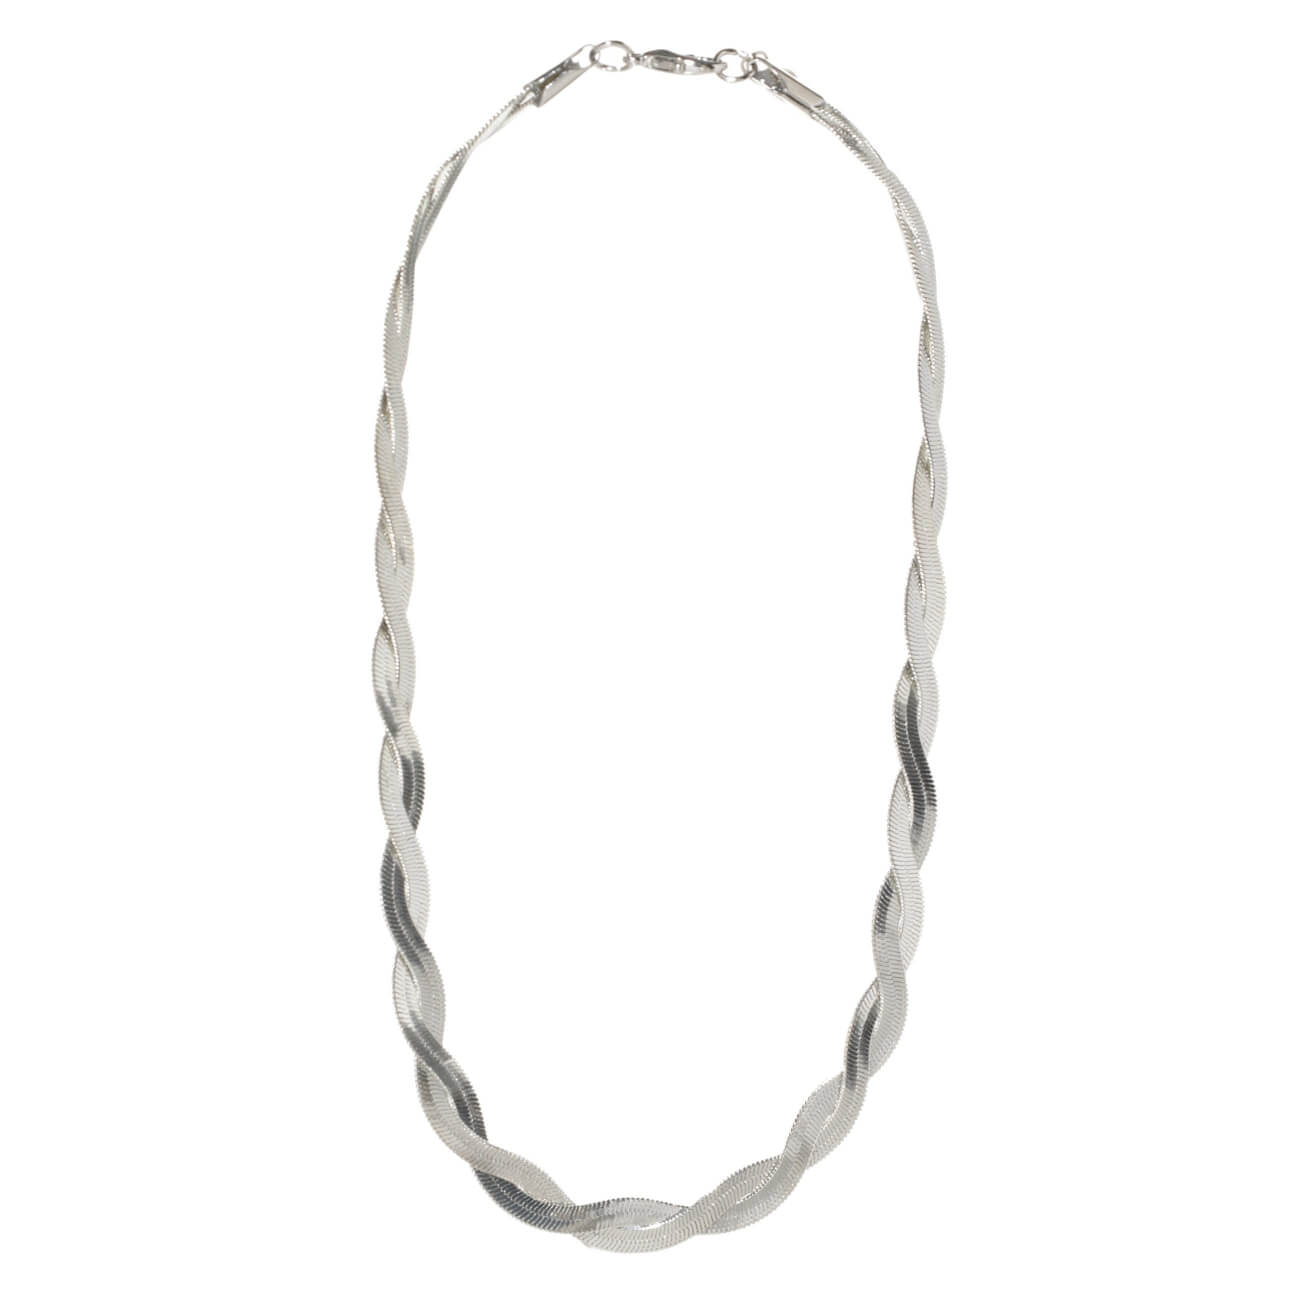 Цепочка, 45 см, двойная, металл, серебристая, Jewelry цепочка для сумки железная d 8 мм 10 ± 0 5 м серебряный